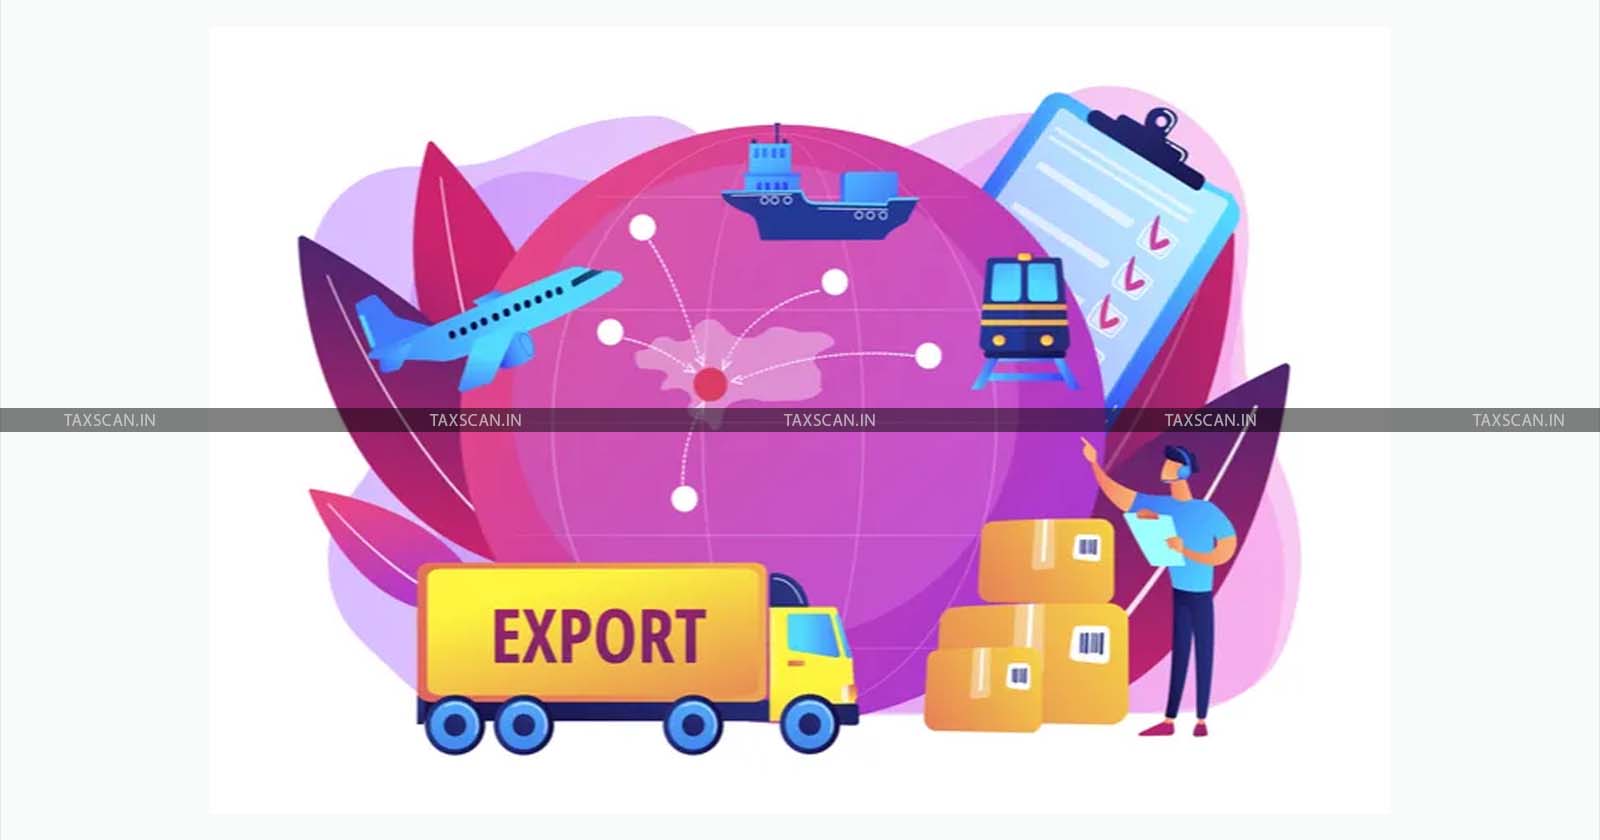 Govt - Govt authorises 4 Ports for Exporting Essential Commodities - Exporting Essential Commodities - taxscan